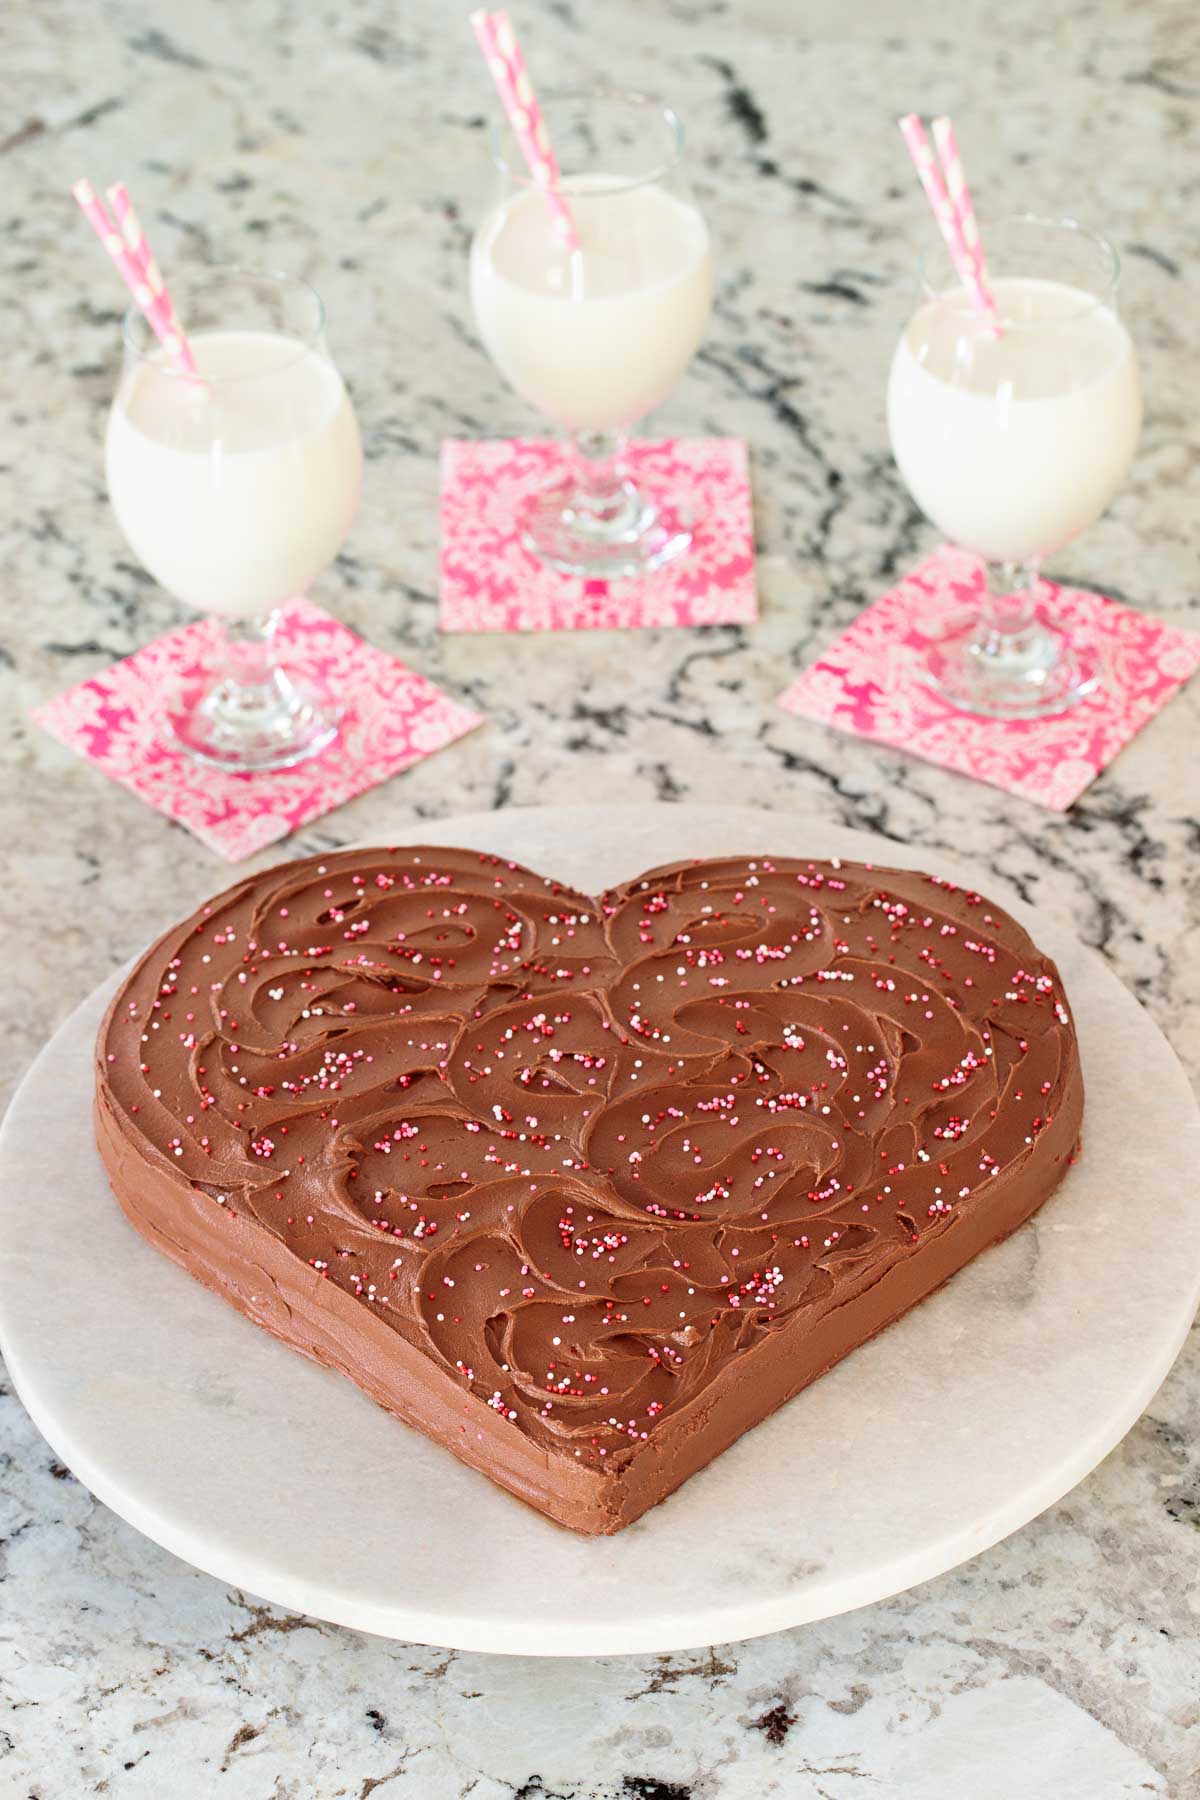 Shop for Fresh Romantic Couple Heart Shape Valentines Theme Cake online -  Durg-sgquangbinhtourist.com.vn